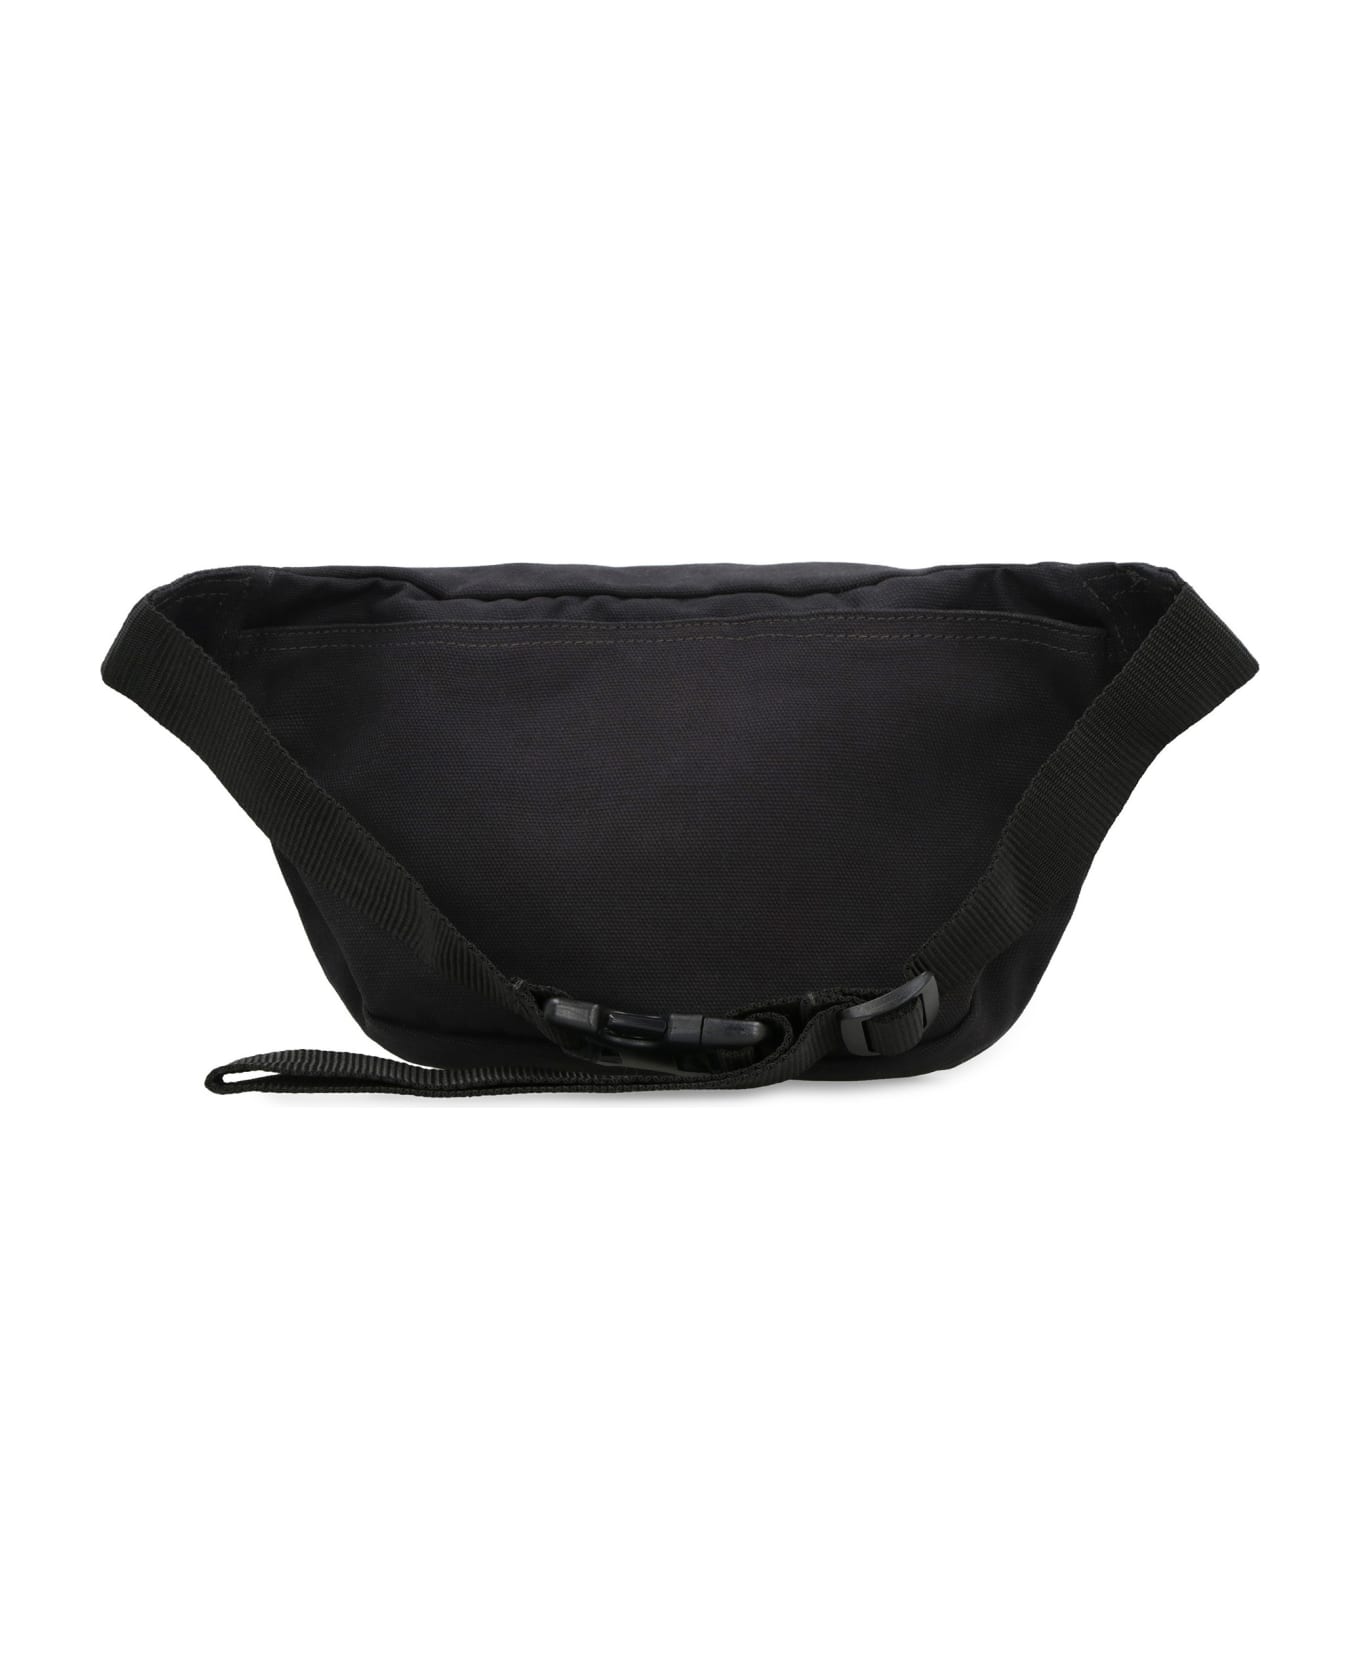 Dickies Blanchard Fabric Shoulder Bag - black